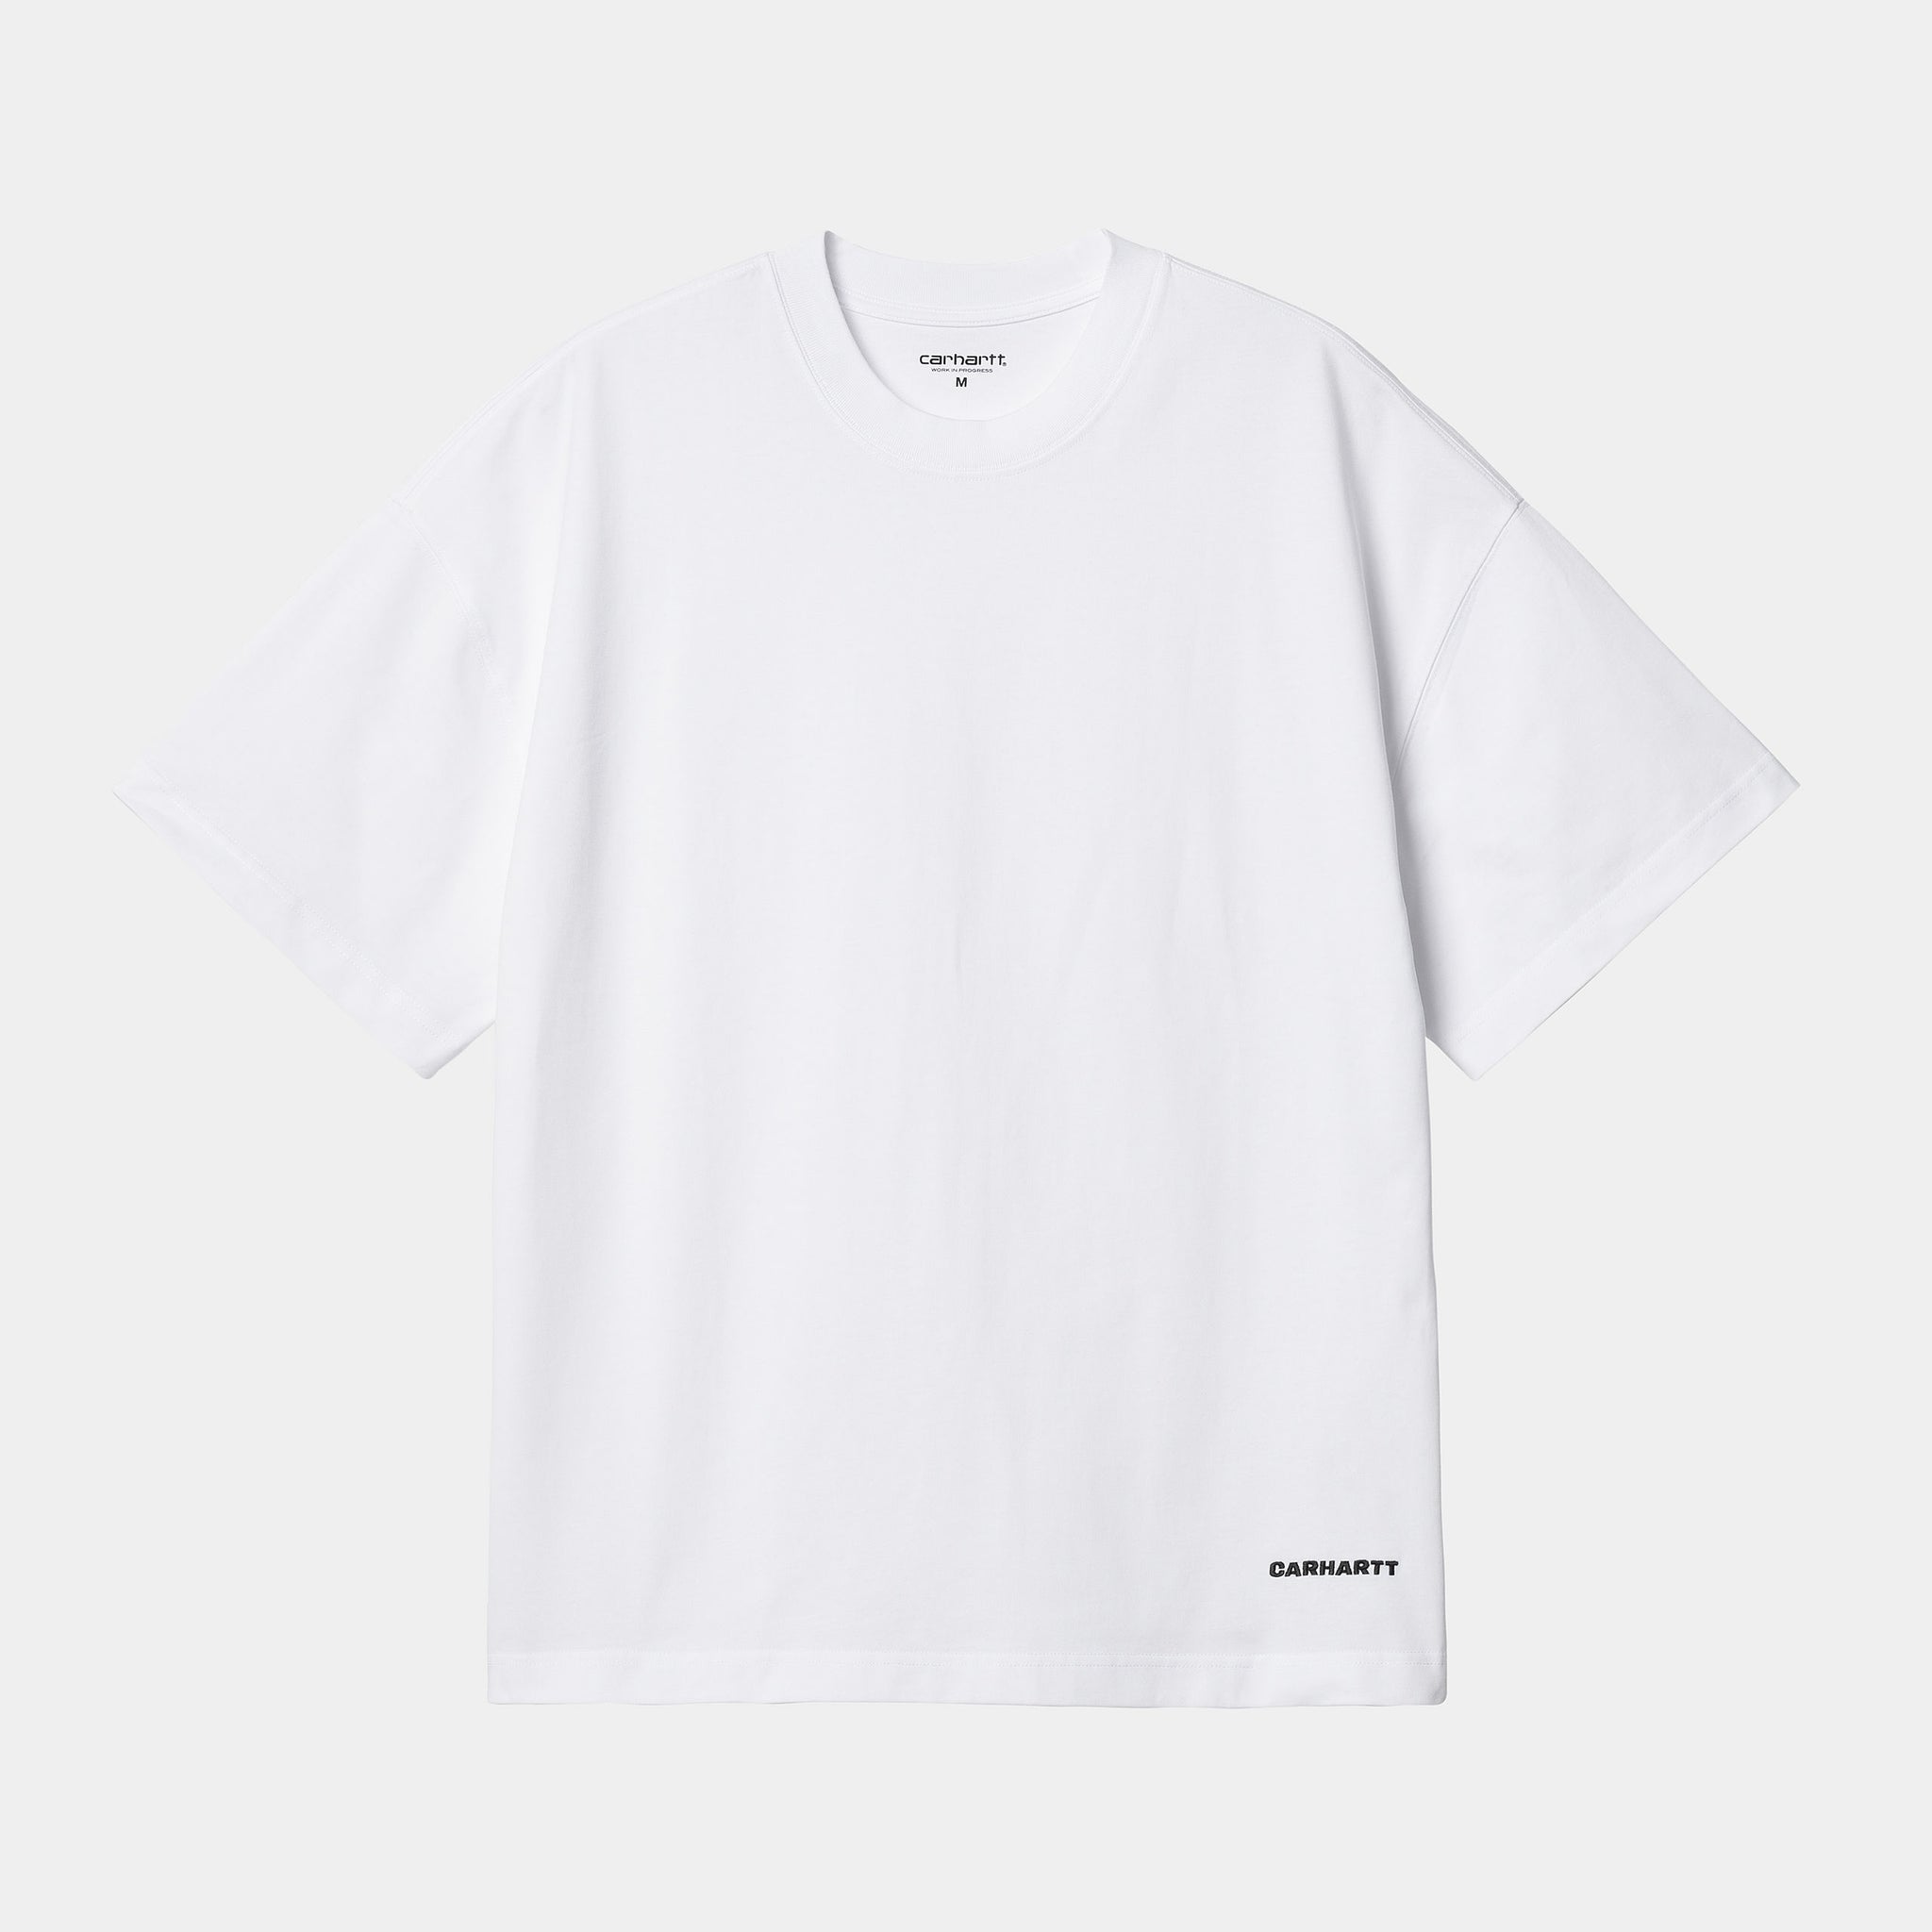 S/s Link Script T-shirt 100% Organic Cotton Single Jersey, 230 G/m² (White / Black)